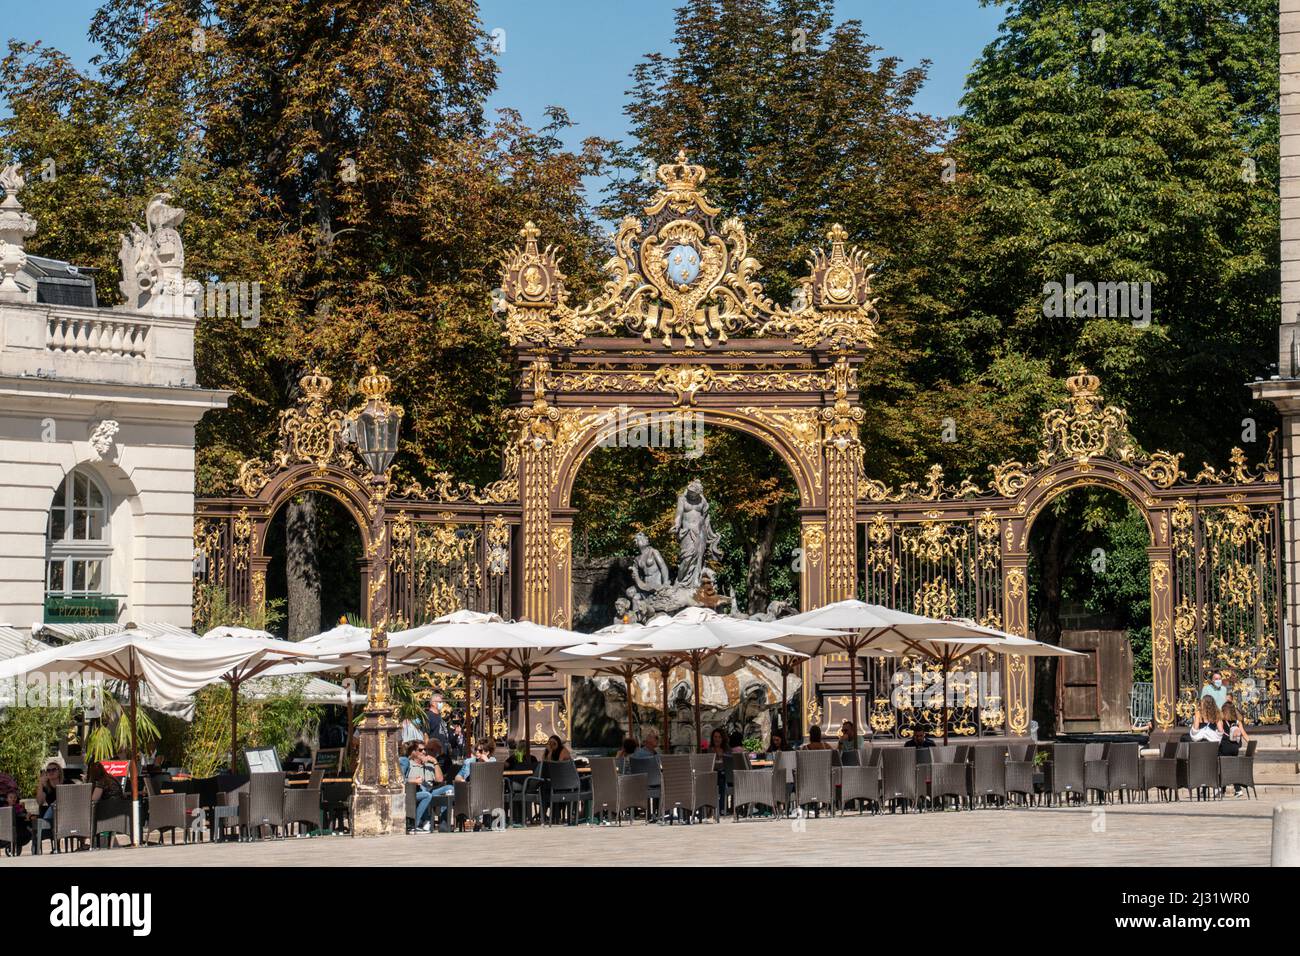 Place Stanislas, Fountain of Amphitrite in the Golden Gate, Street Cafe, Nancy, Lorraine, France, Europe Stock Photo